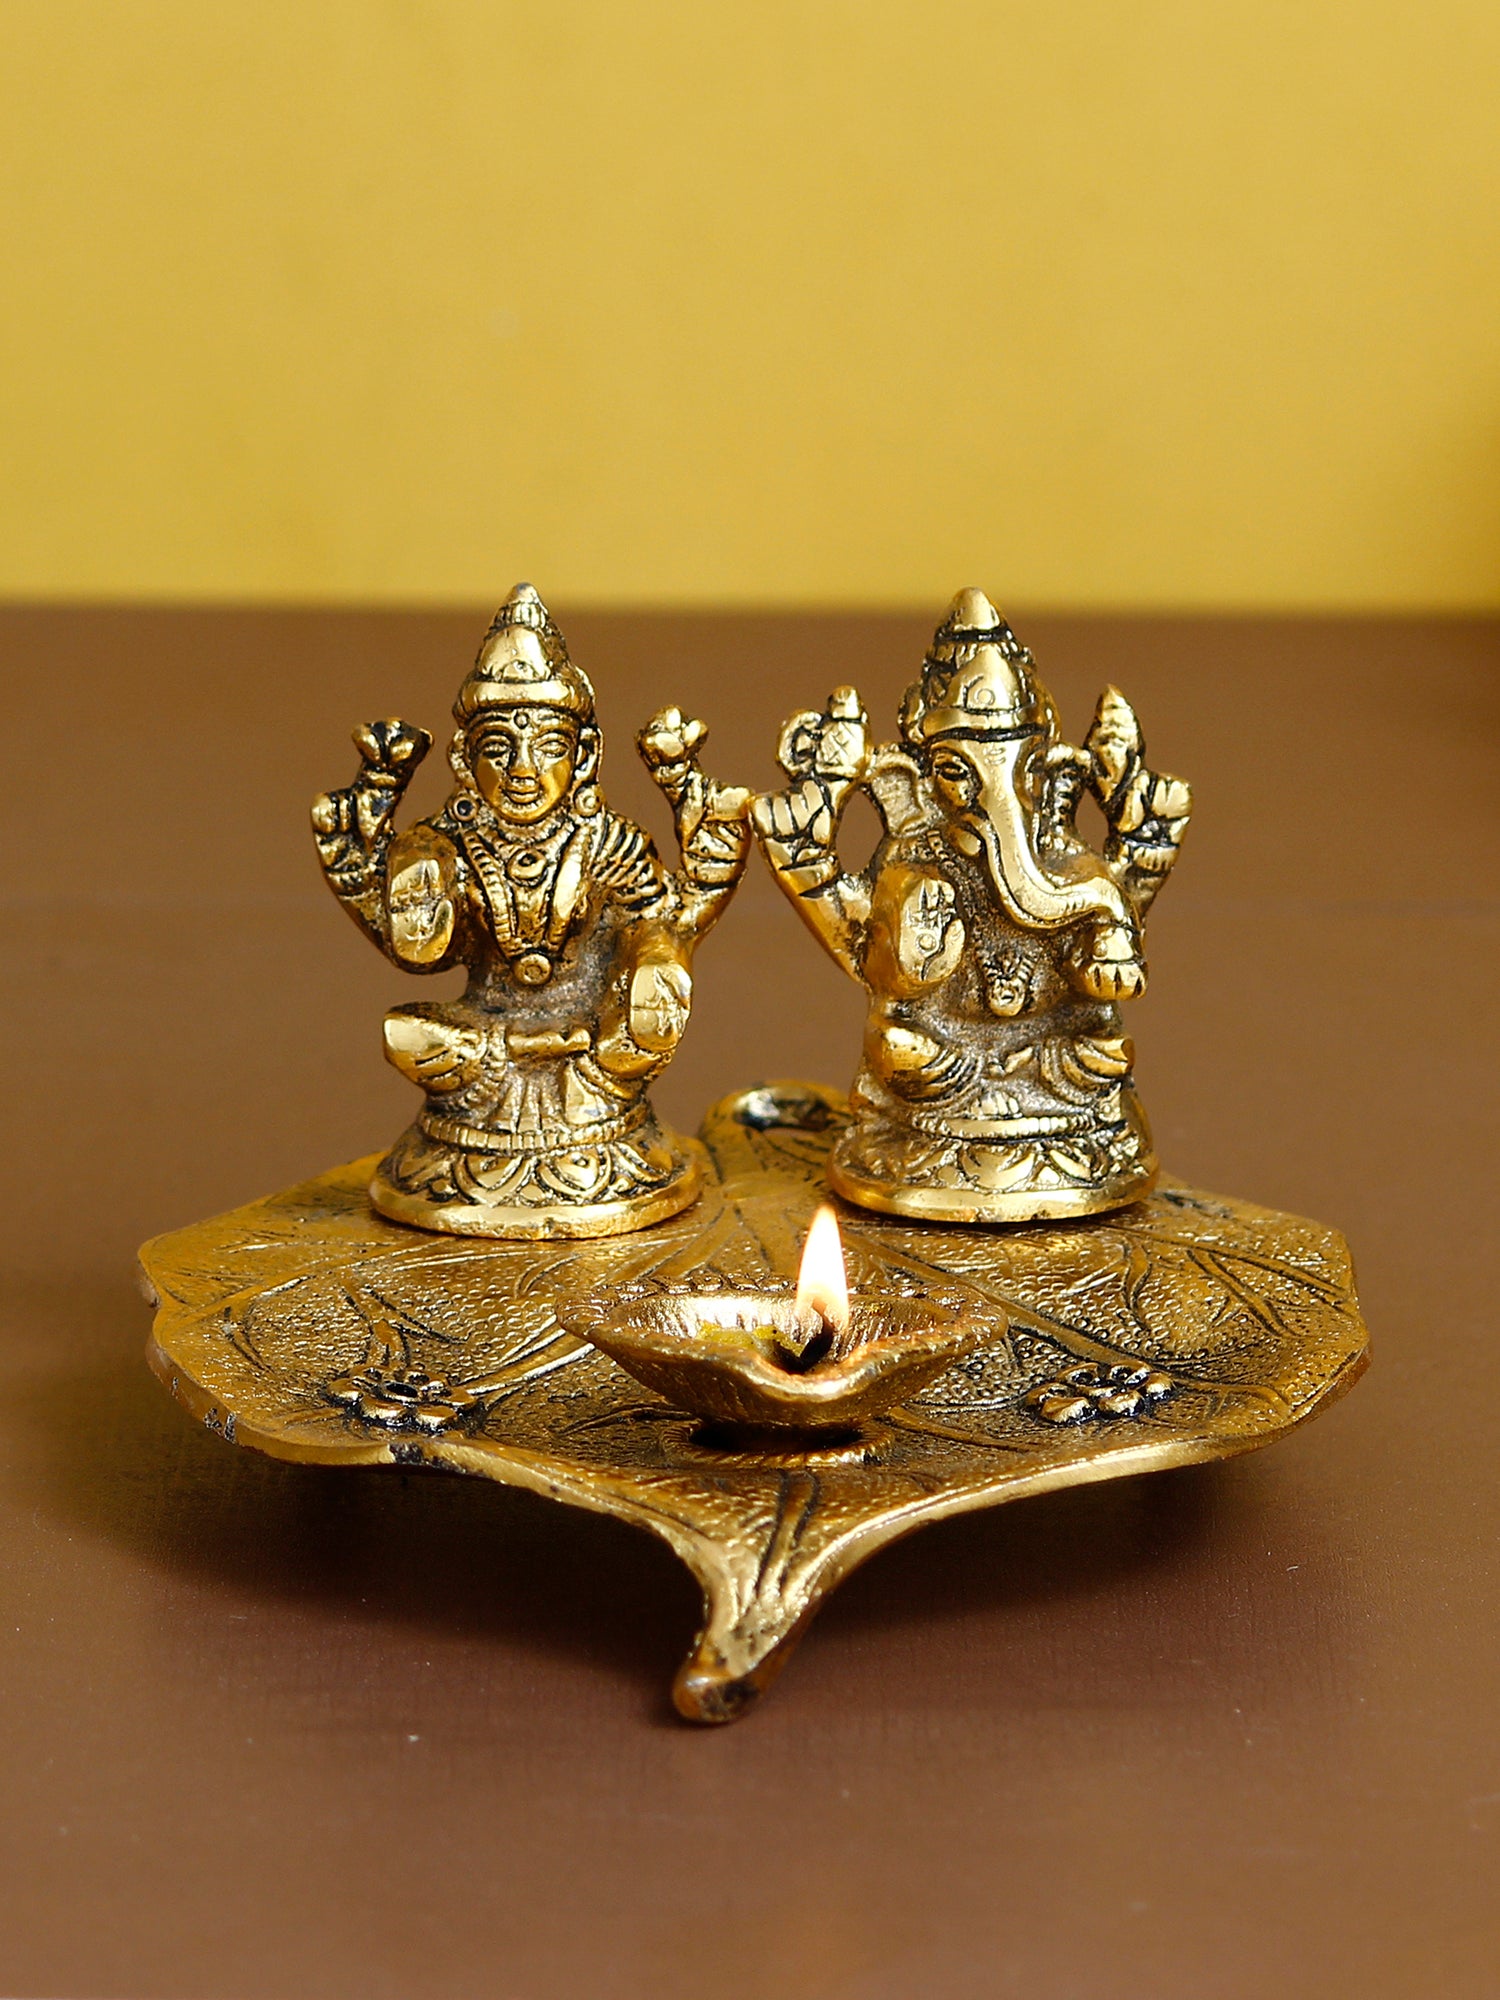 Set of 4 Designer Pearl Rakhis with Golden Goddess Lakshmi and Lord Ganesha Idols with Decorative Diya, Roli Chawal Pack, Raksha Bandhan Greeting Card 1